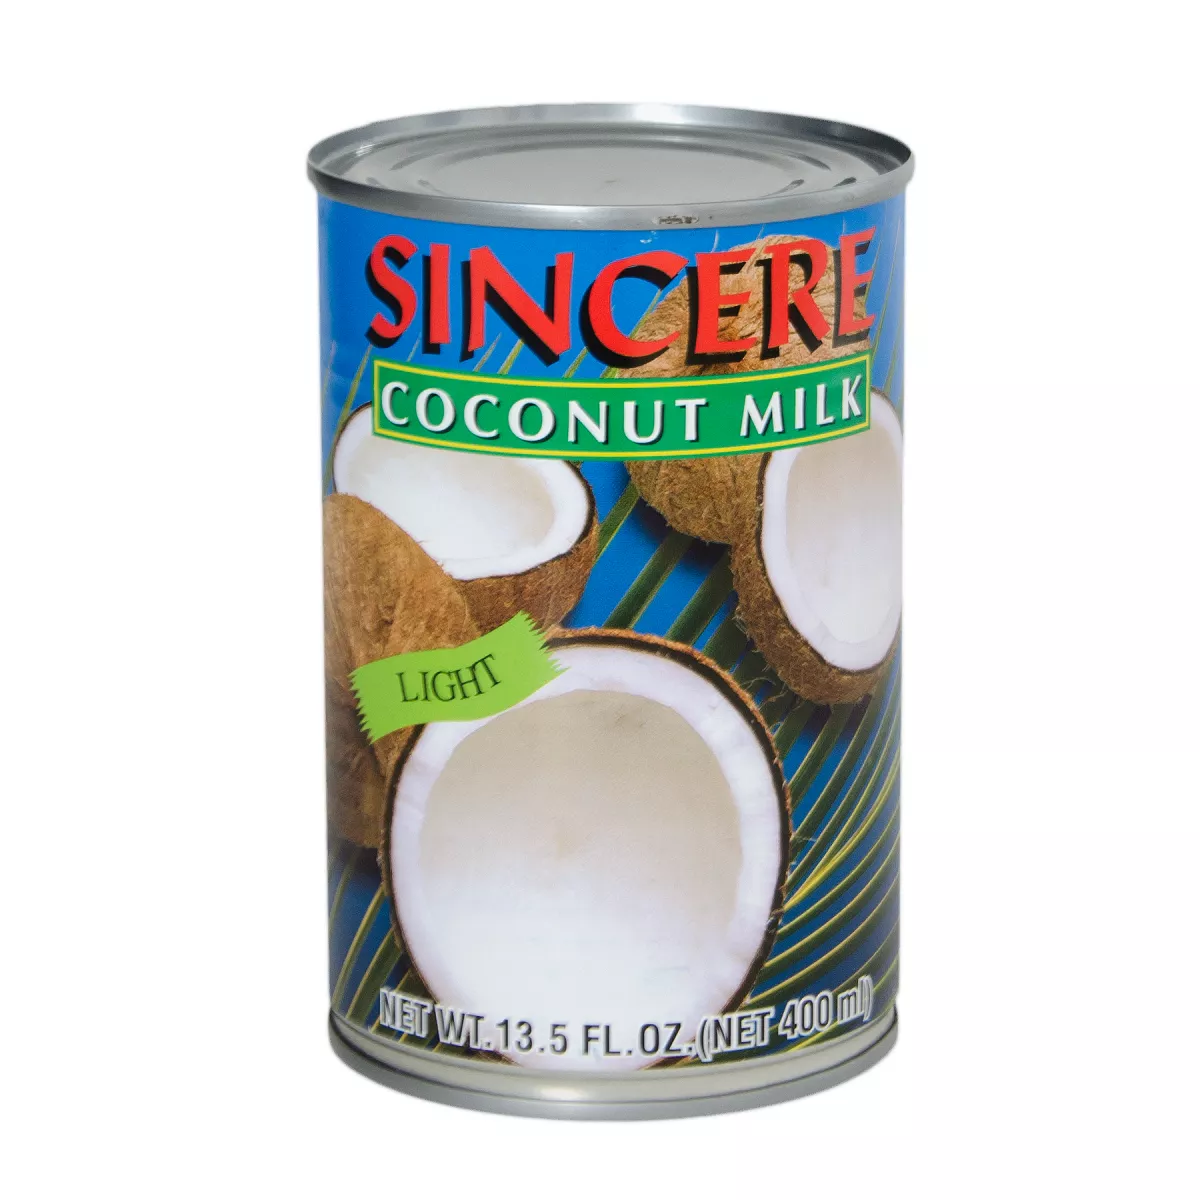 Lapte de cocos 5% grasime SINCERE 400ml, [],asianfood.ro